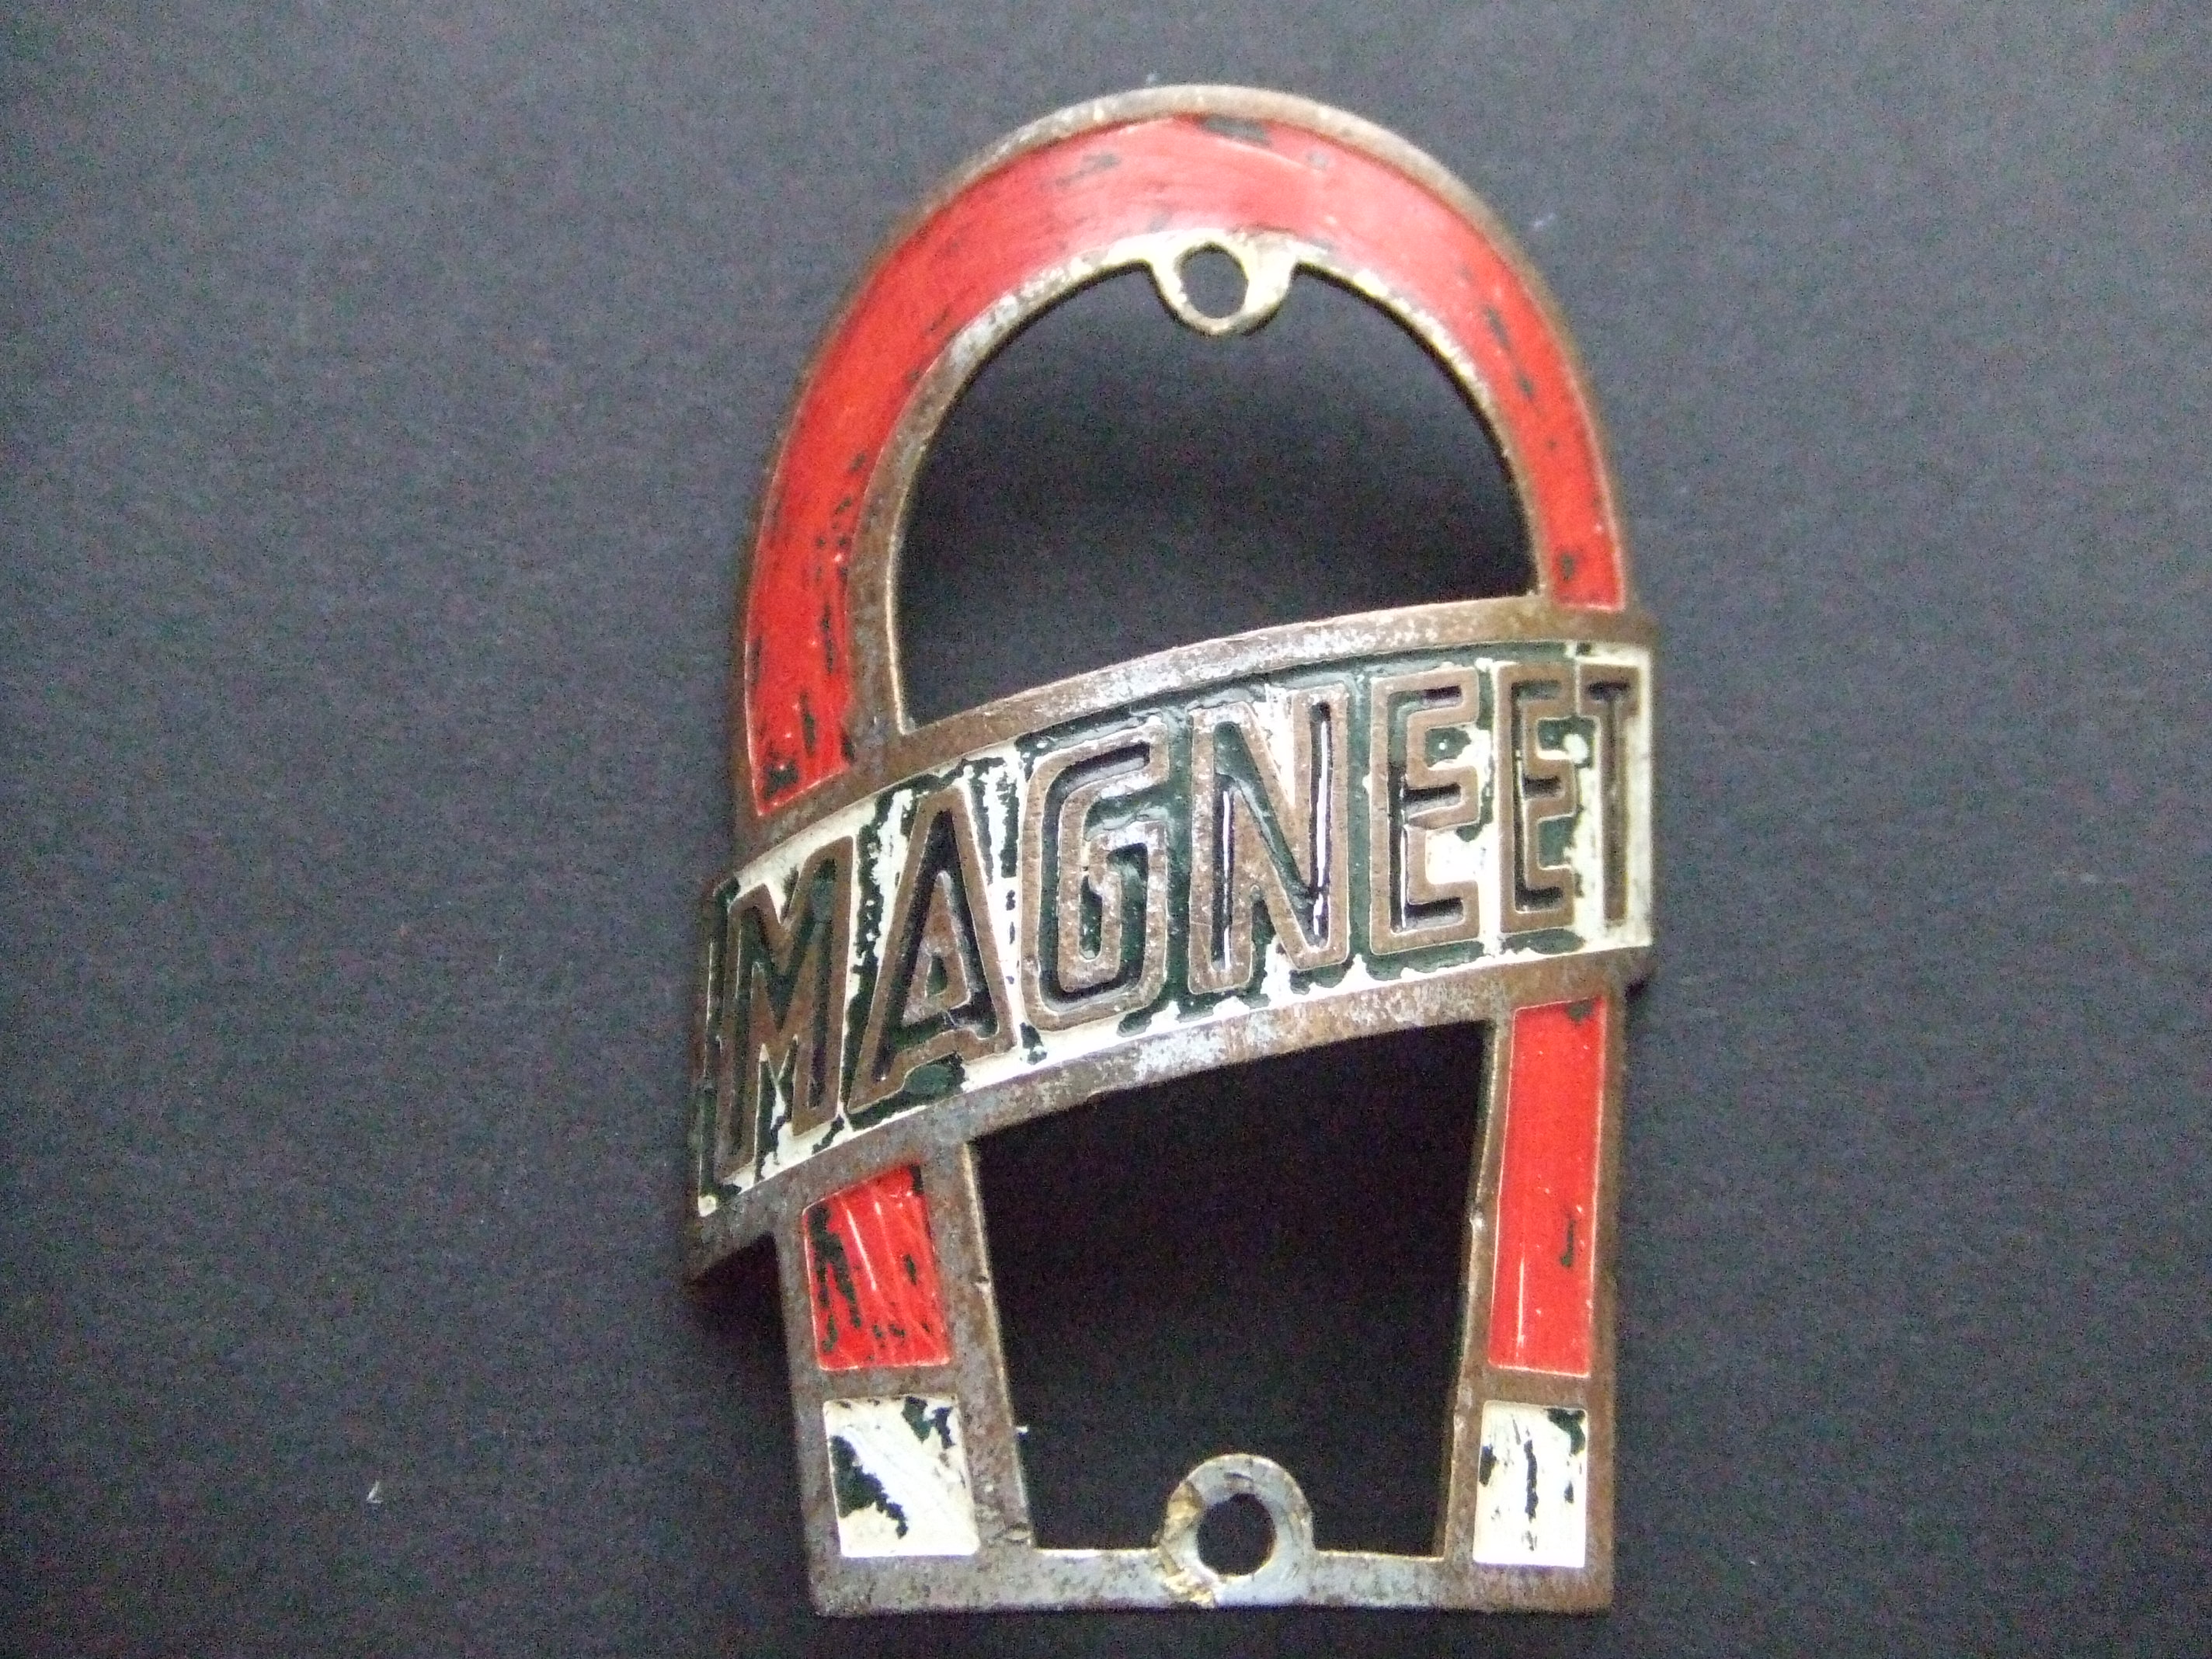 Magneet Rijwielen, Motorenfabriek Weesp oud balhoofdplaatje 2